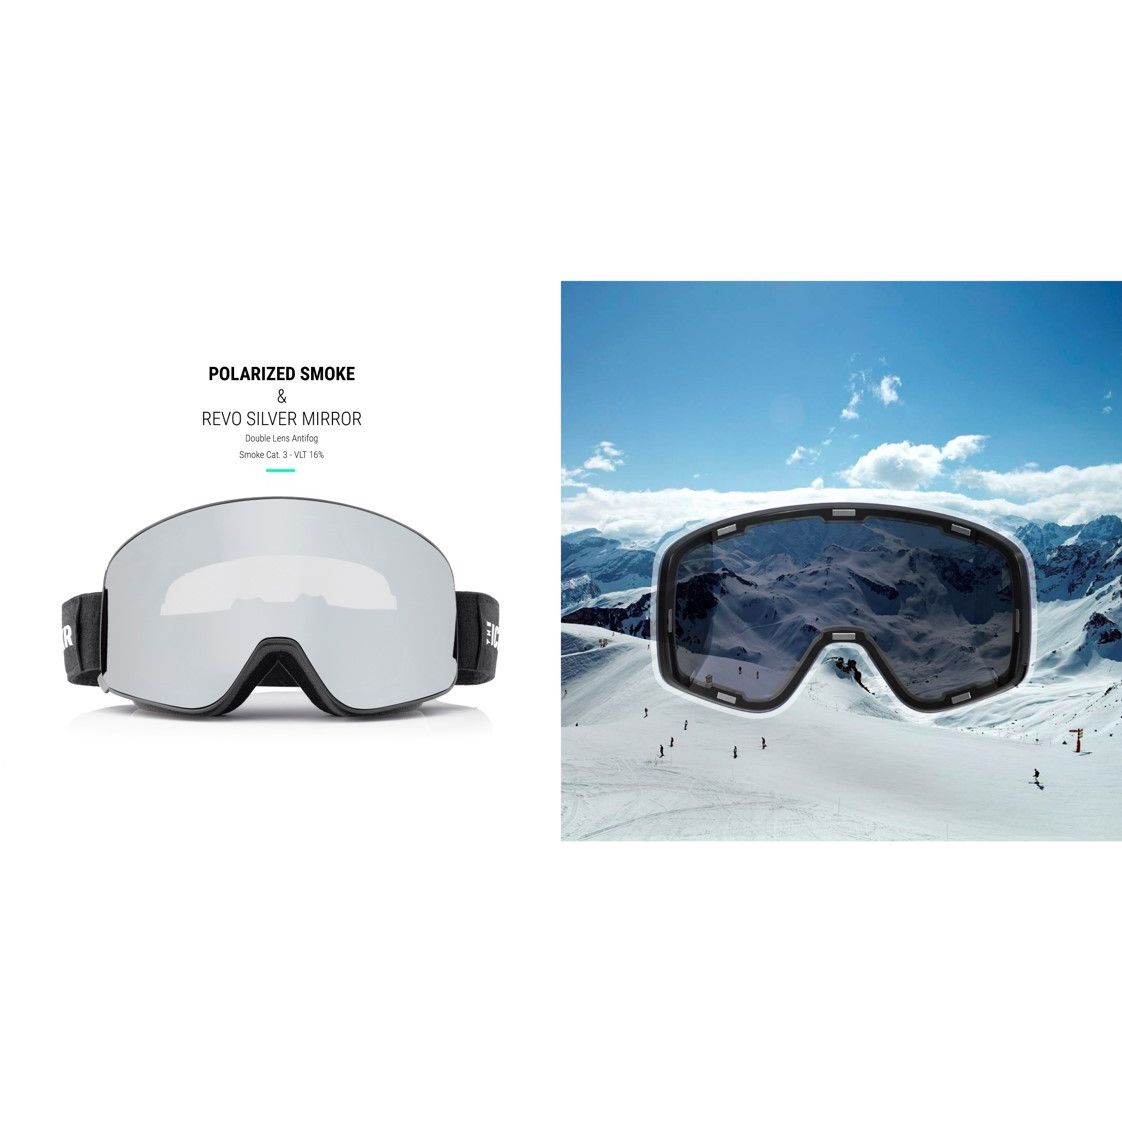  Ochelari Ski -  bonetech ICEBRKR Black Silver Mirror